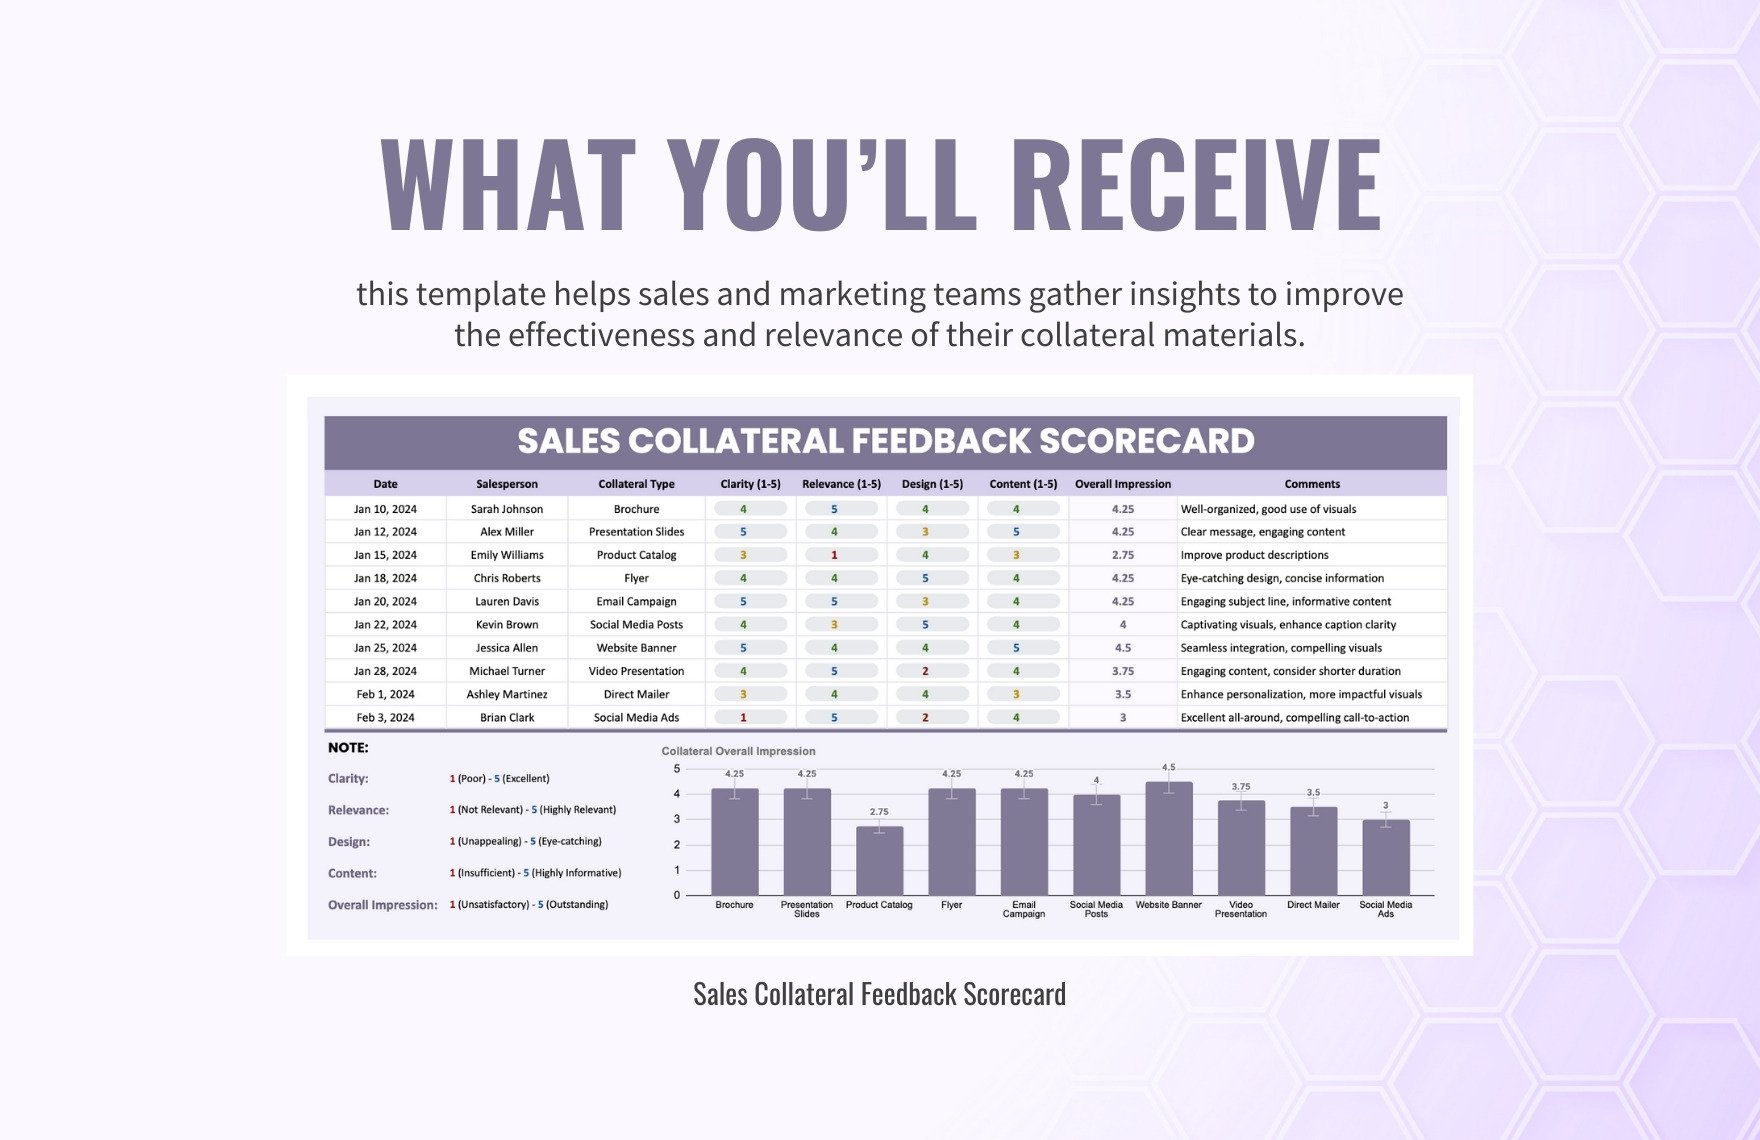 Sales Collateral Feedback Scorecard Template